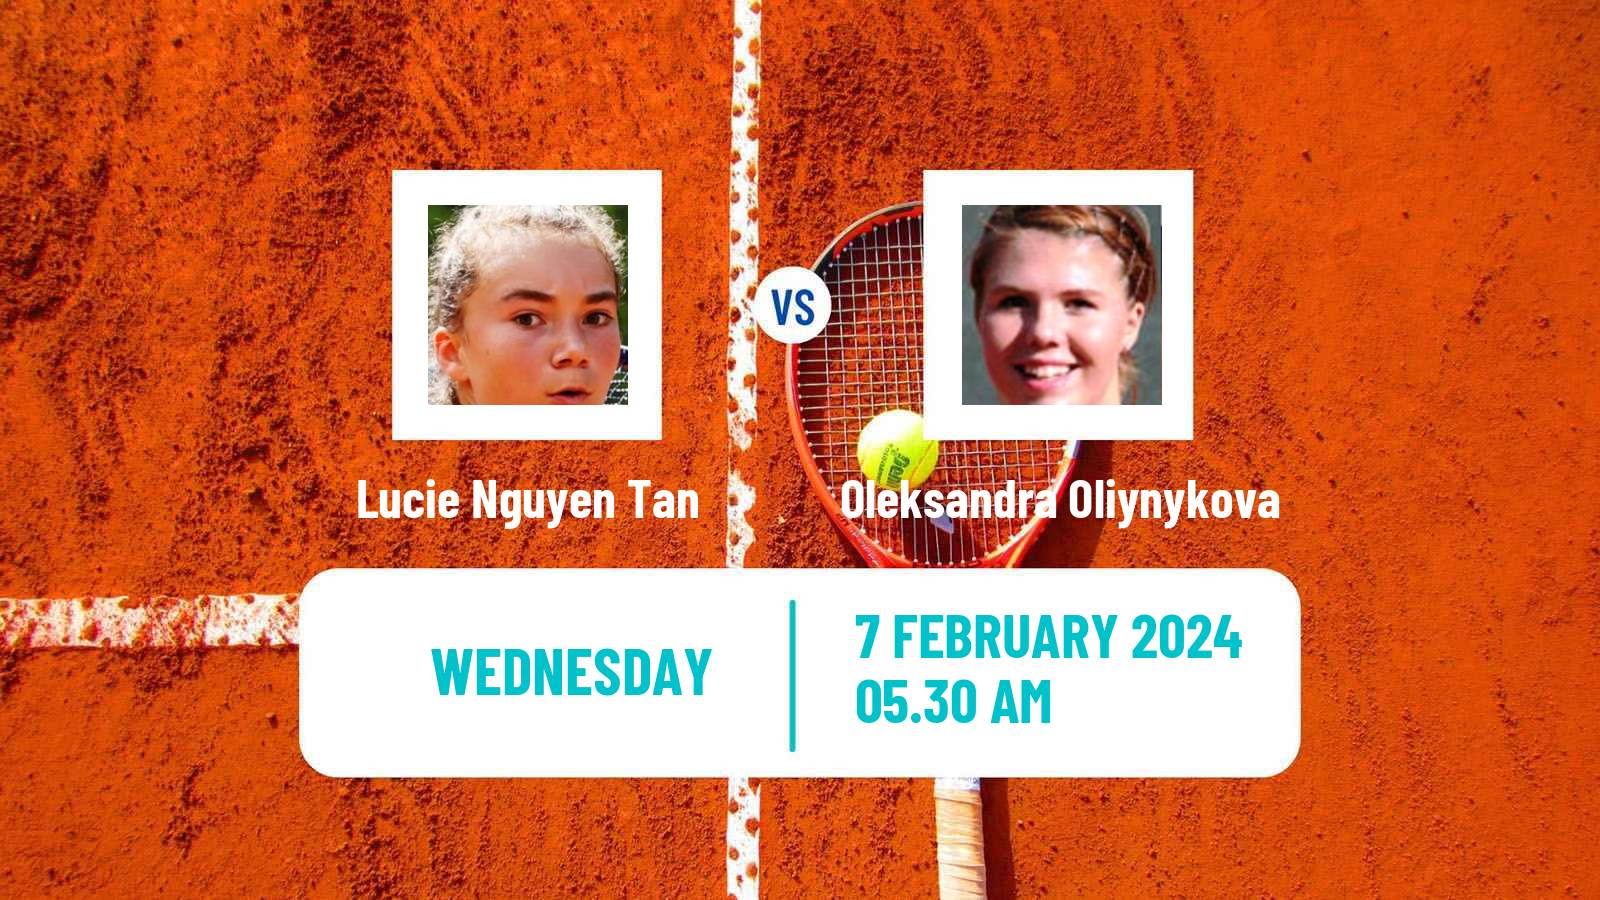 Tennis ITF W35 Antalya 2 Women Lucie Nguyen Tan - Oleksandra Oliynykova